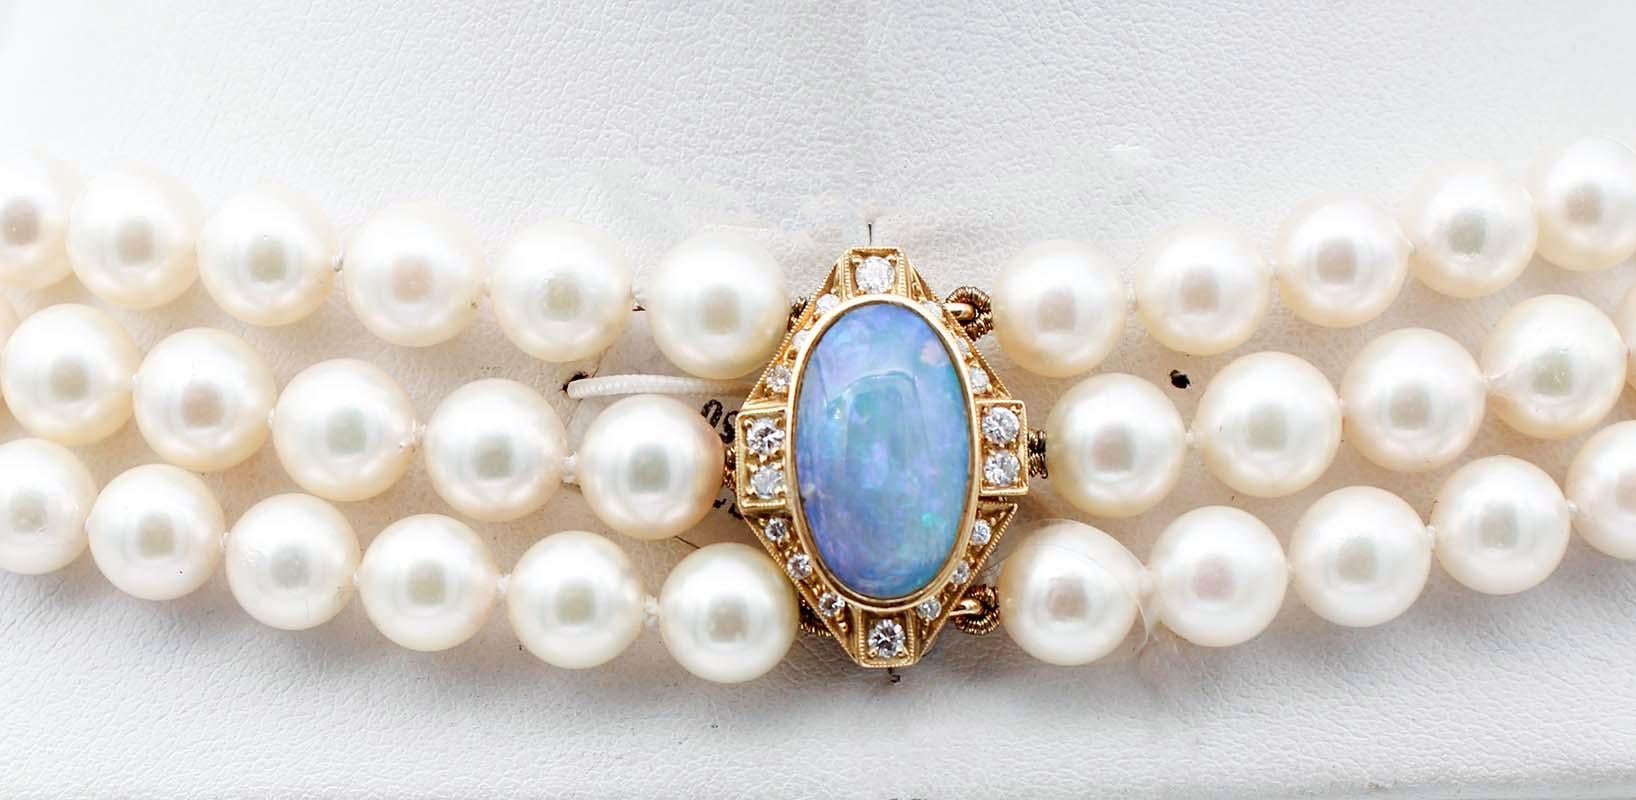 Brilliant Cut Diamonds, Opals, Akoya Pearls, 18 Karat Gold, Multi-Strands Beaded Necklace